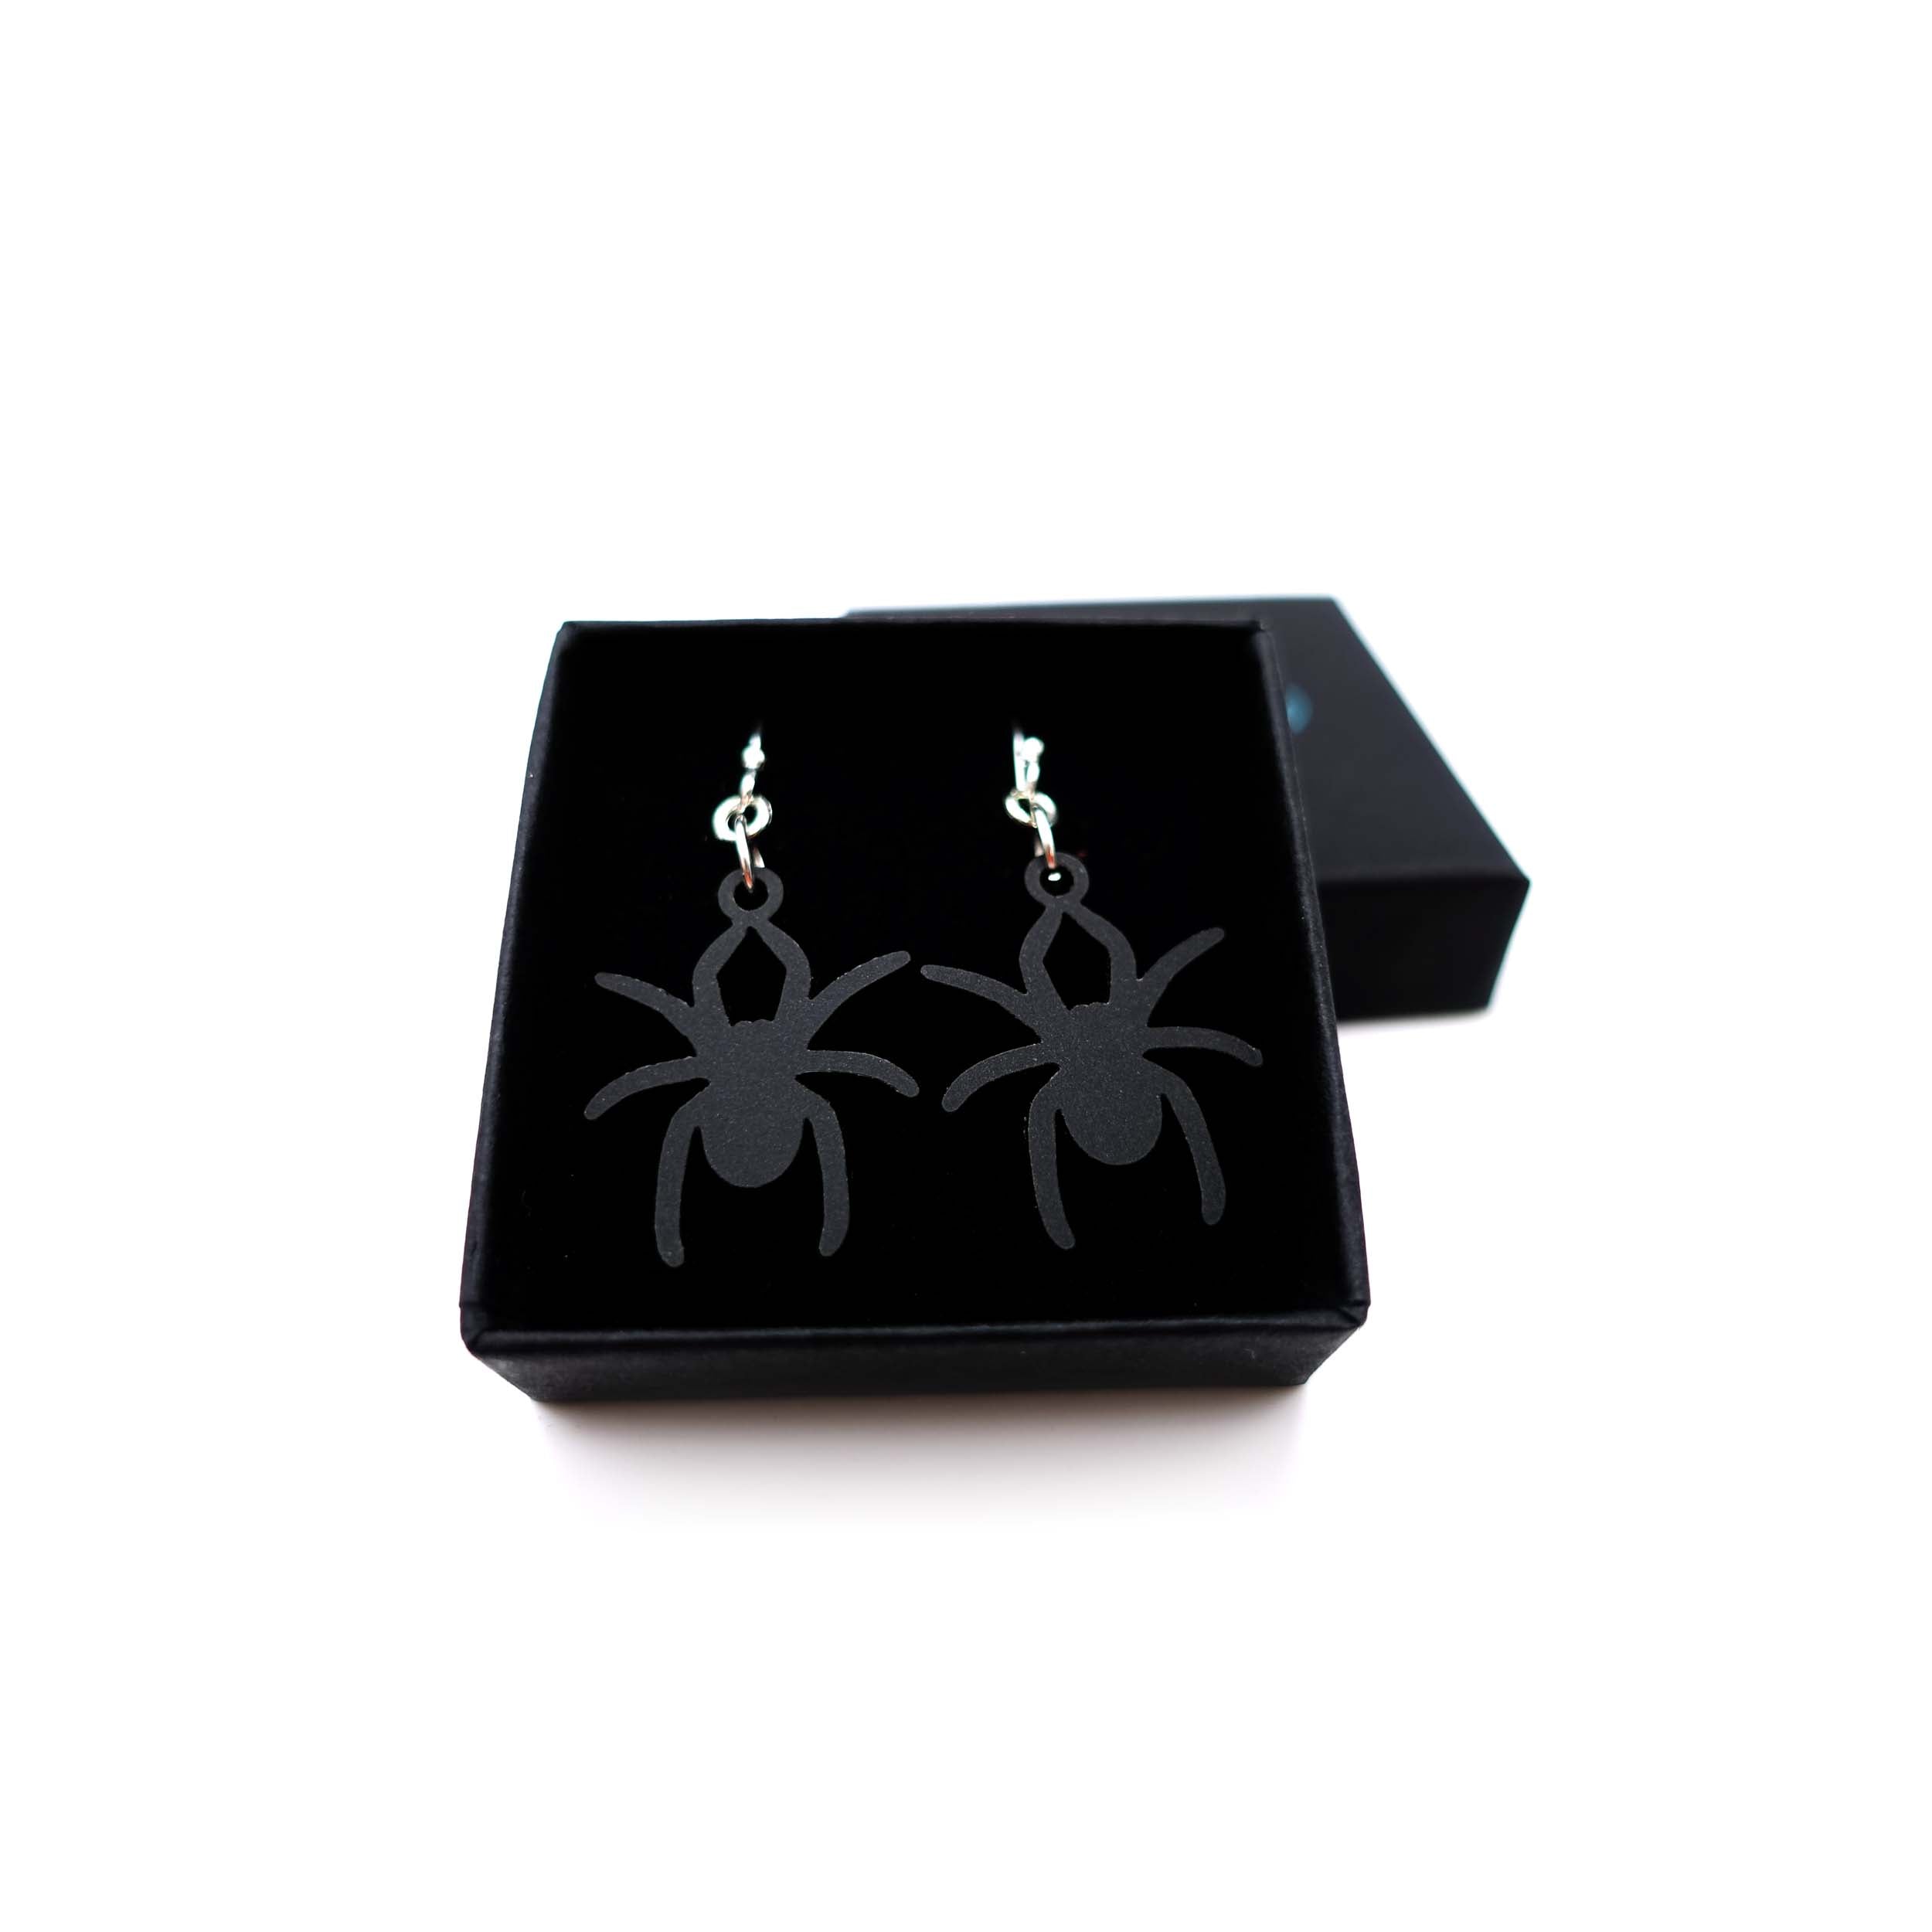 Lady Hale commemorative spider earrings in matte black shown in box.